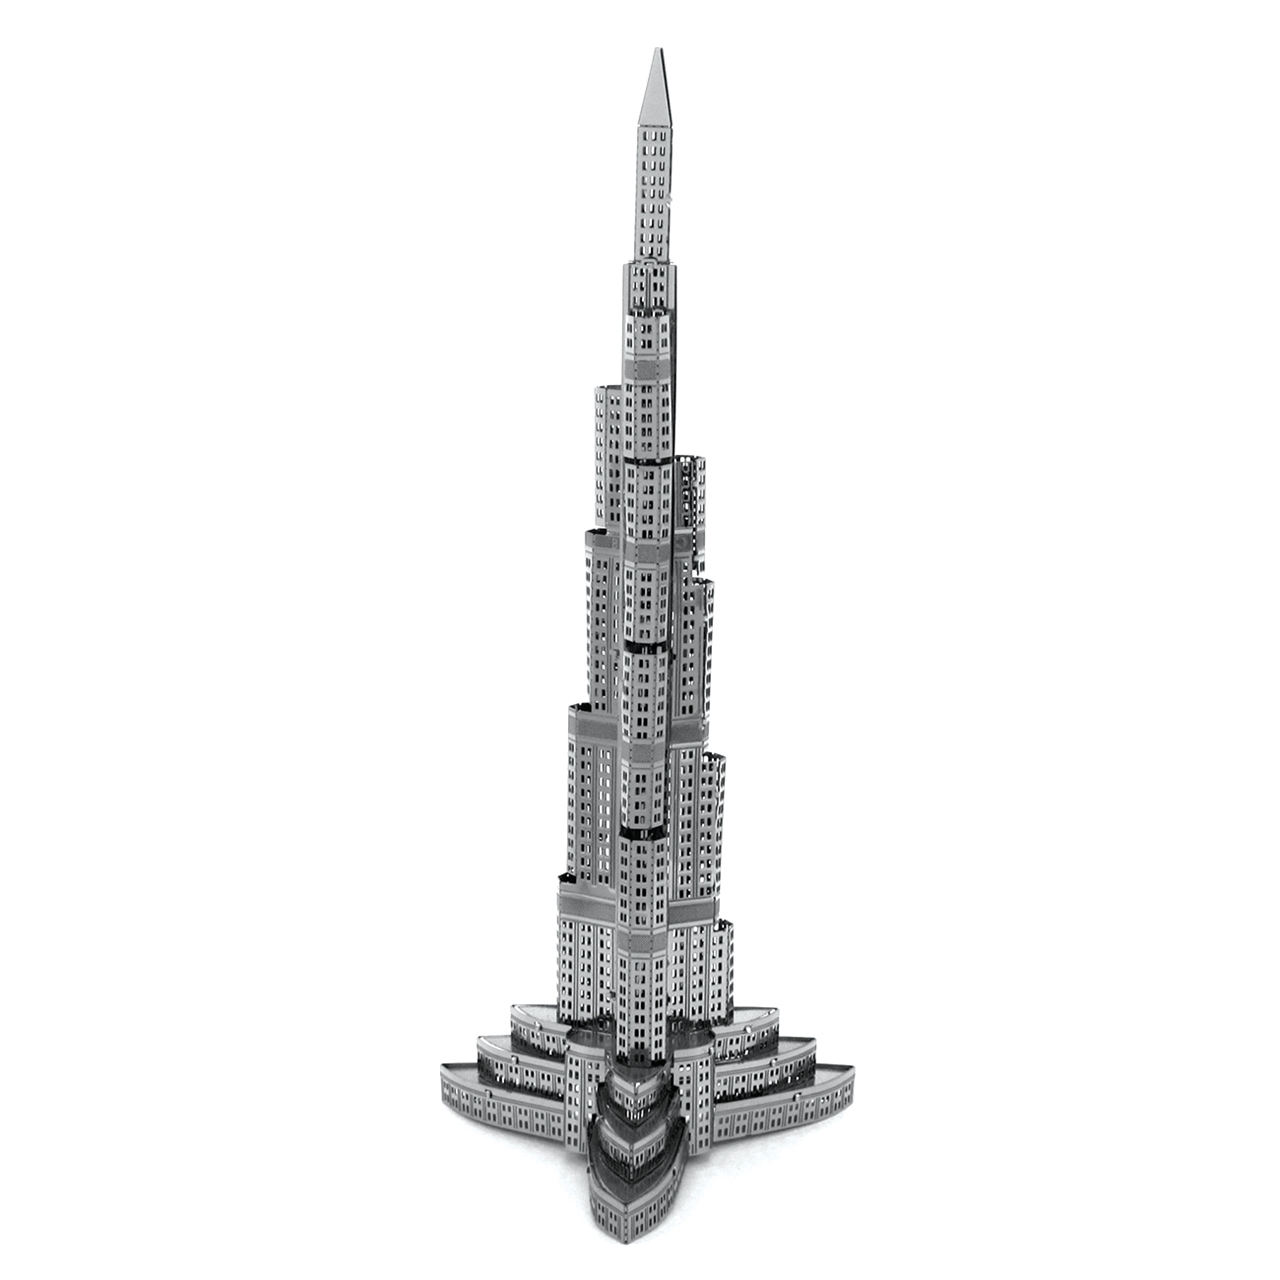 Fascinations Metal Earth 3D Laser Cut Steel Puzzle Model Kit Dubai Burj al Arab